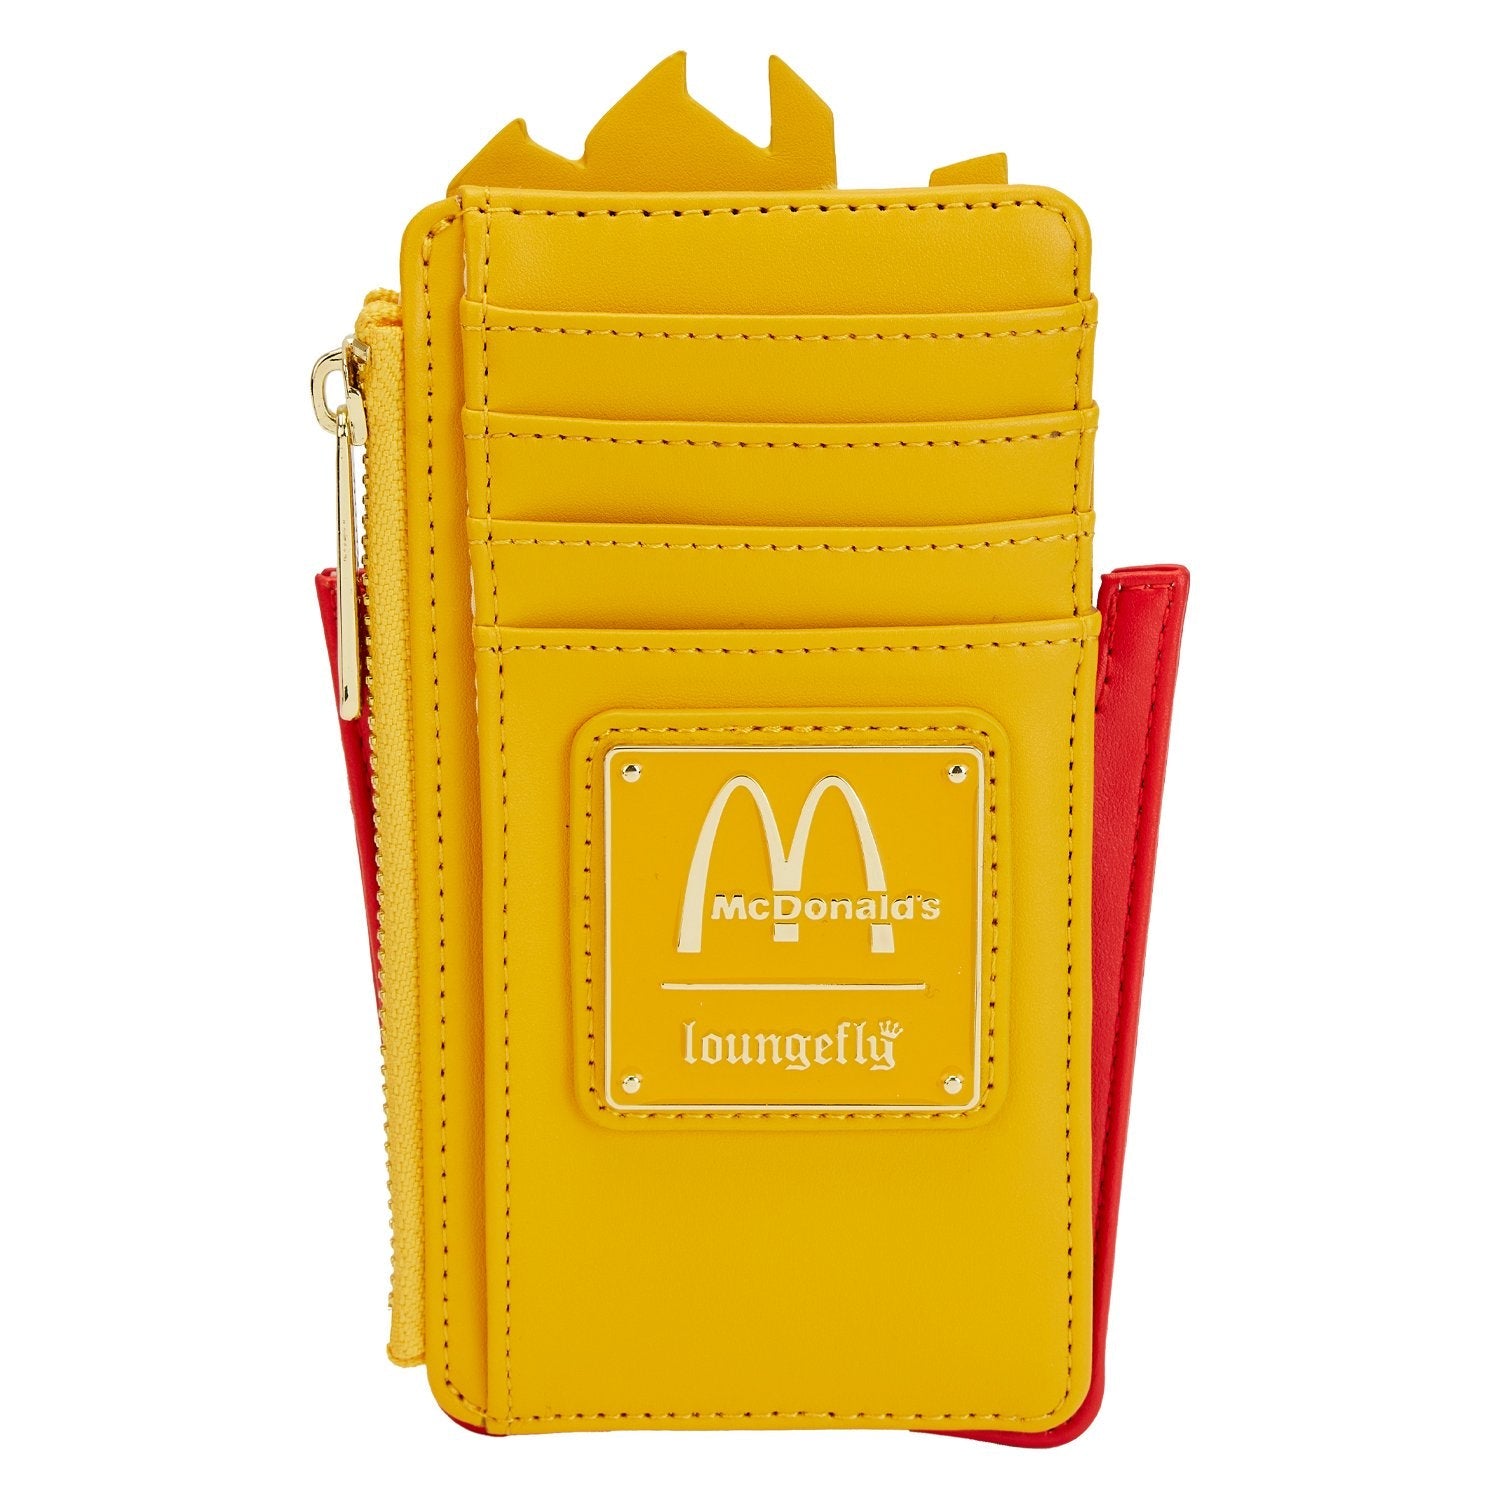 Mc Donalds French Fries Cardholder - Loungefly - 2